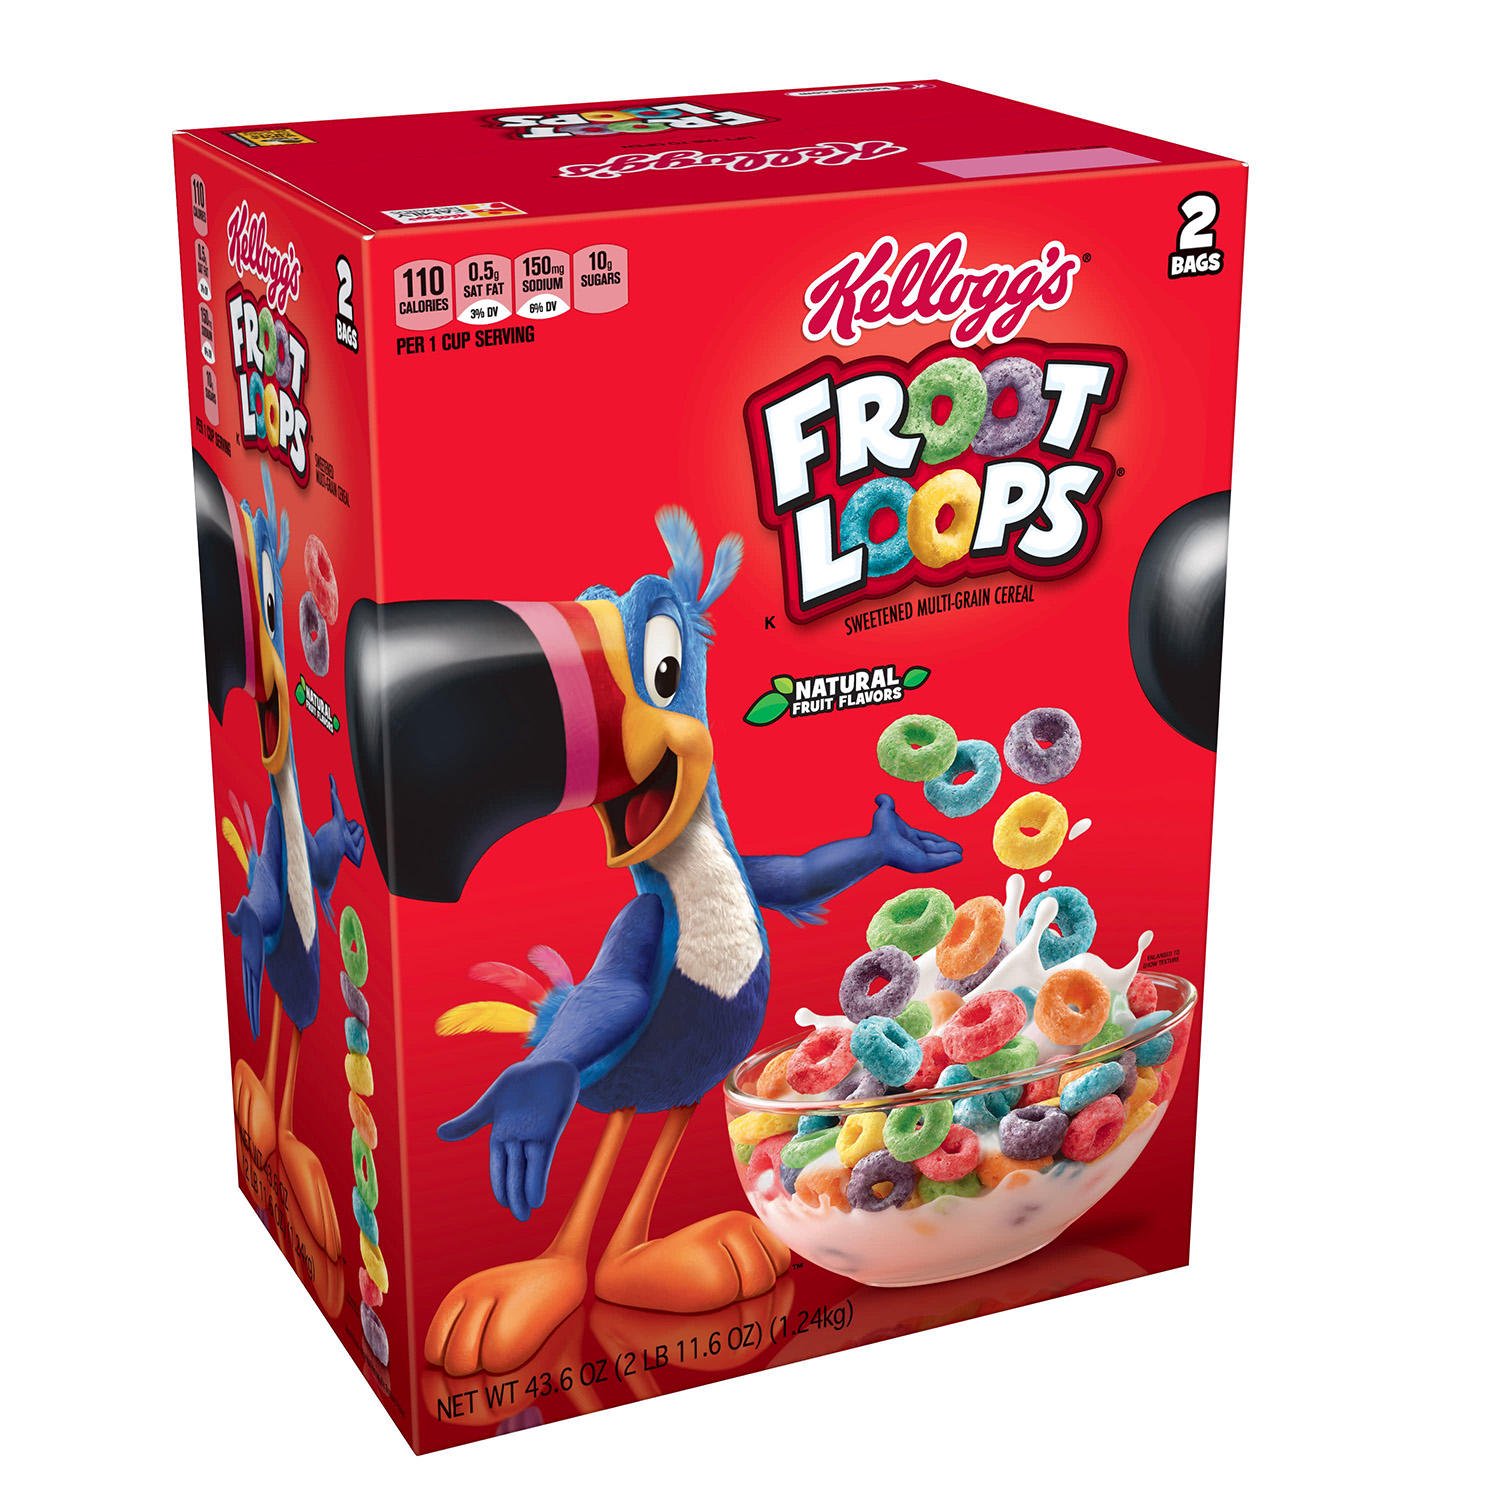 Kellogg’s Froot Loops Cereal (43.6 oz.)